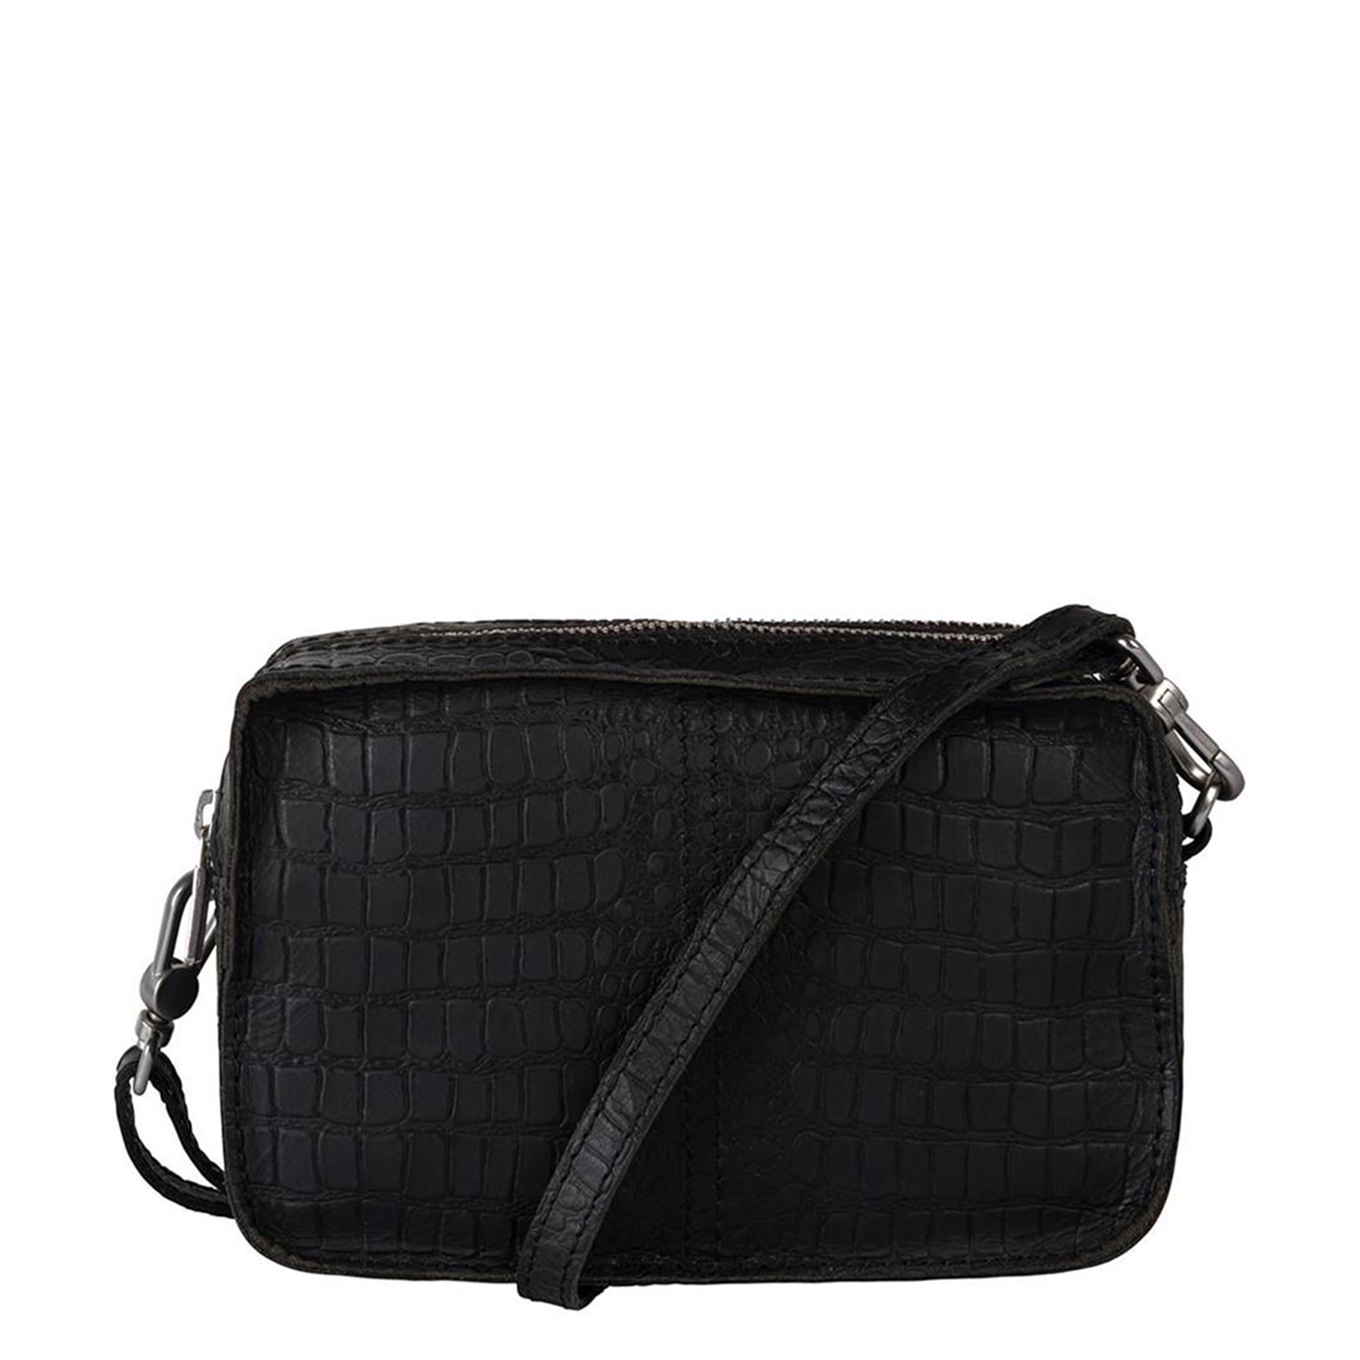 Onzeker Leidinggevende Ontslag nemen Cowboysbag Handbag Lymm croco black | Travelbags.nl